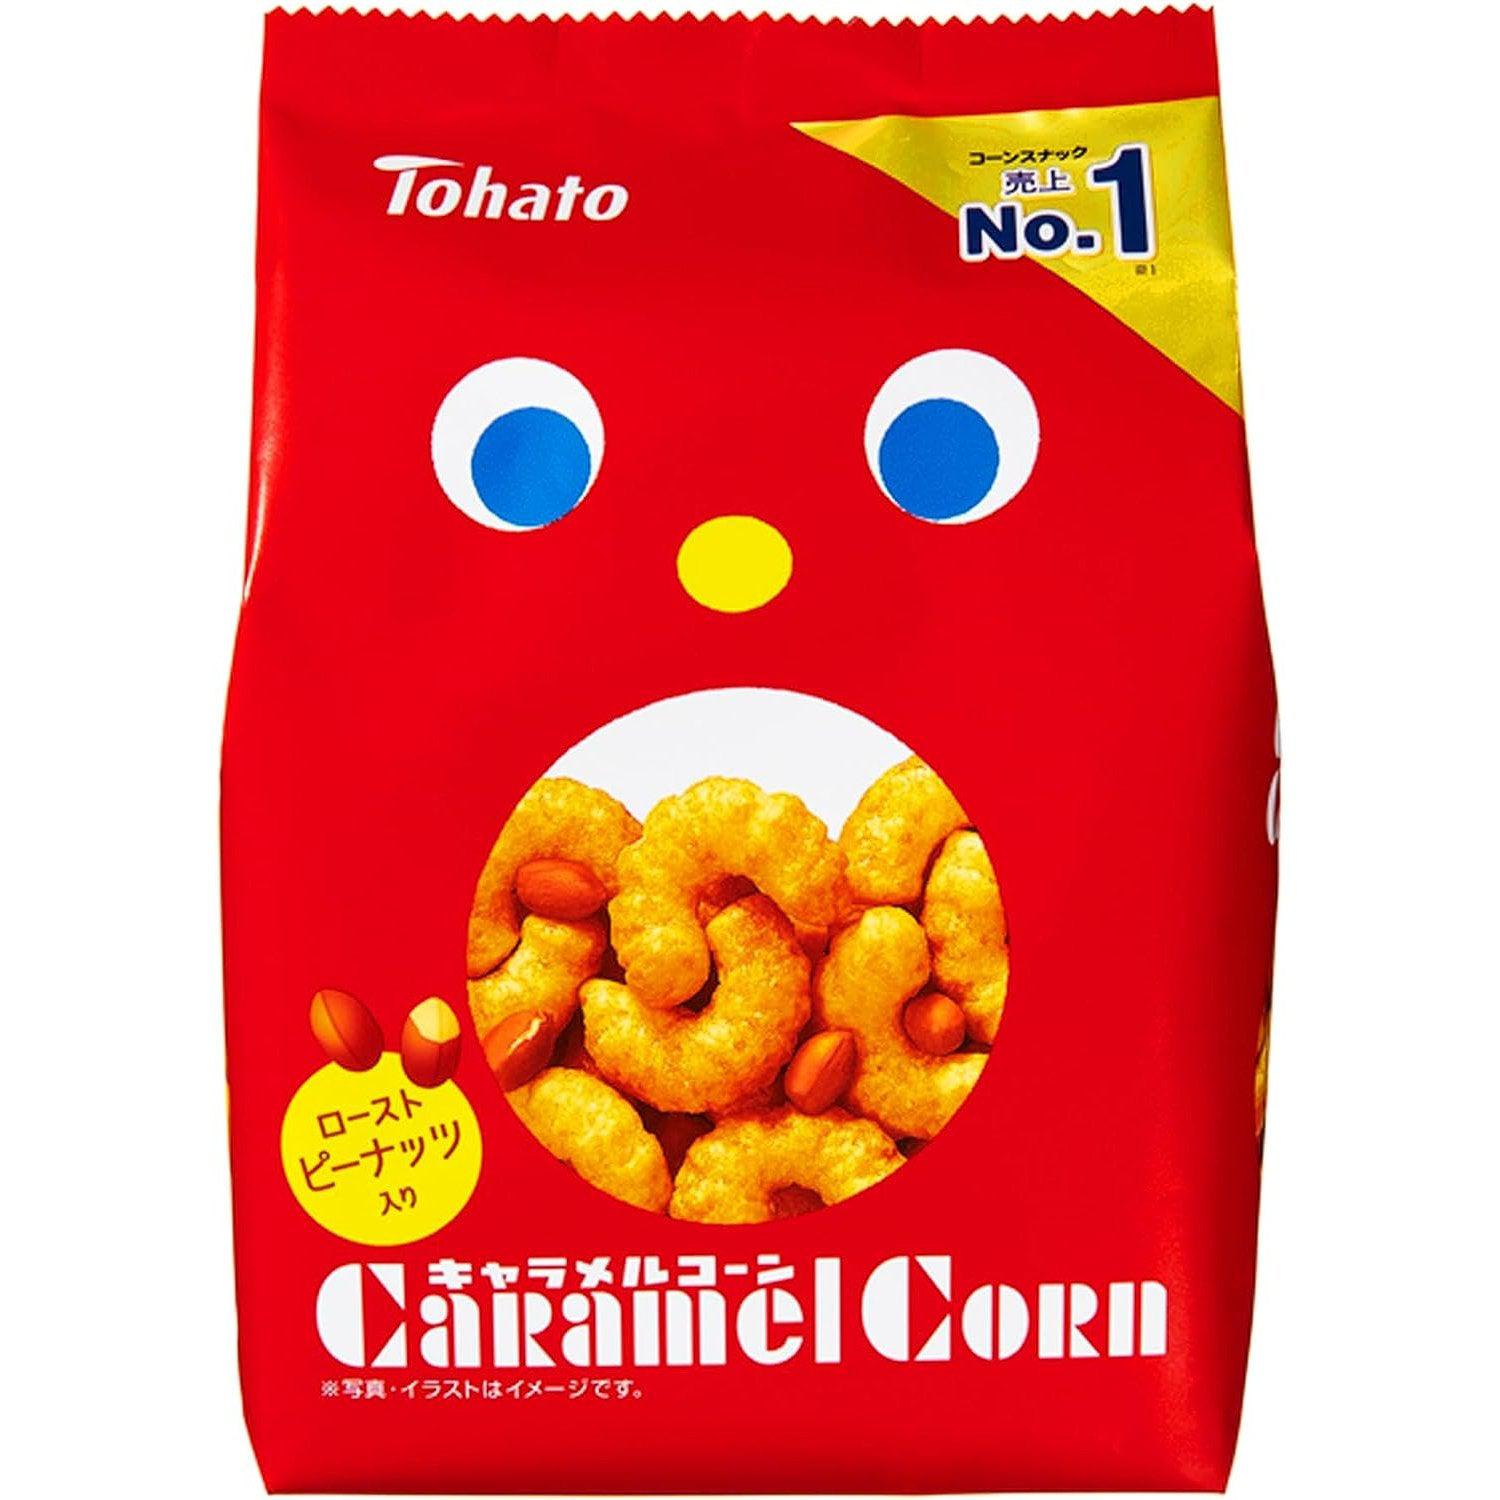 Tohato Caramel Corn Puffs Original Flavor 70g (Box of 12 Bags)